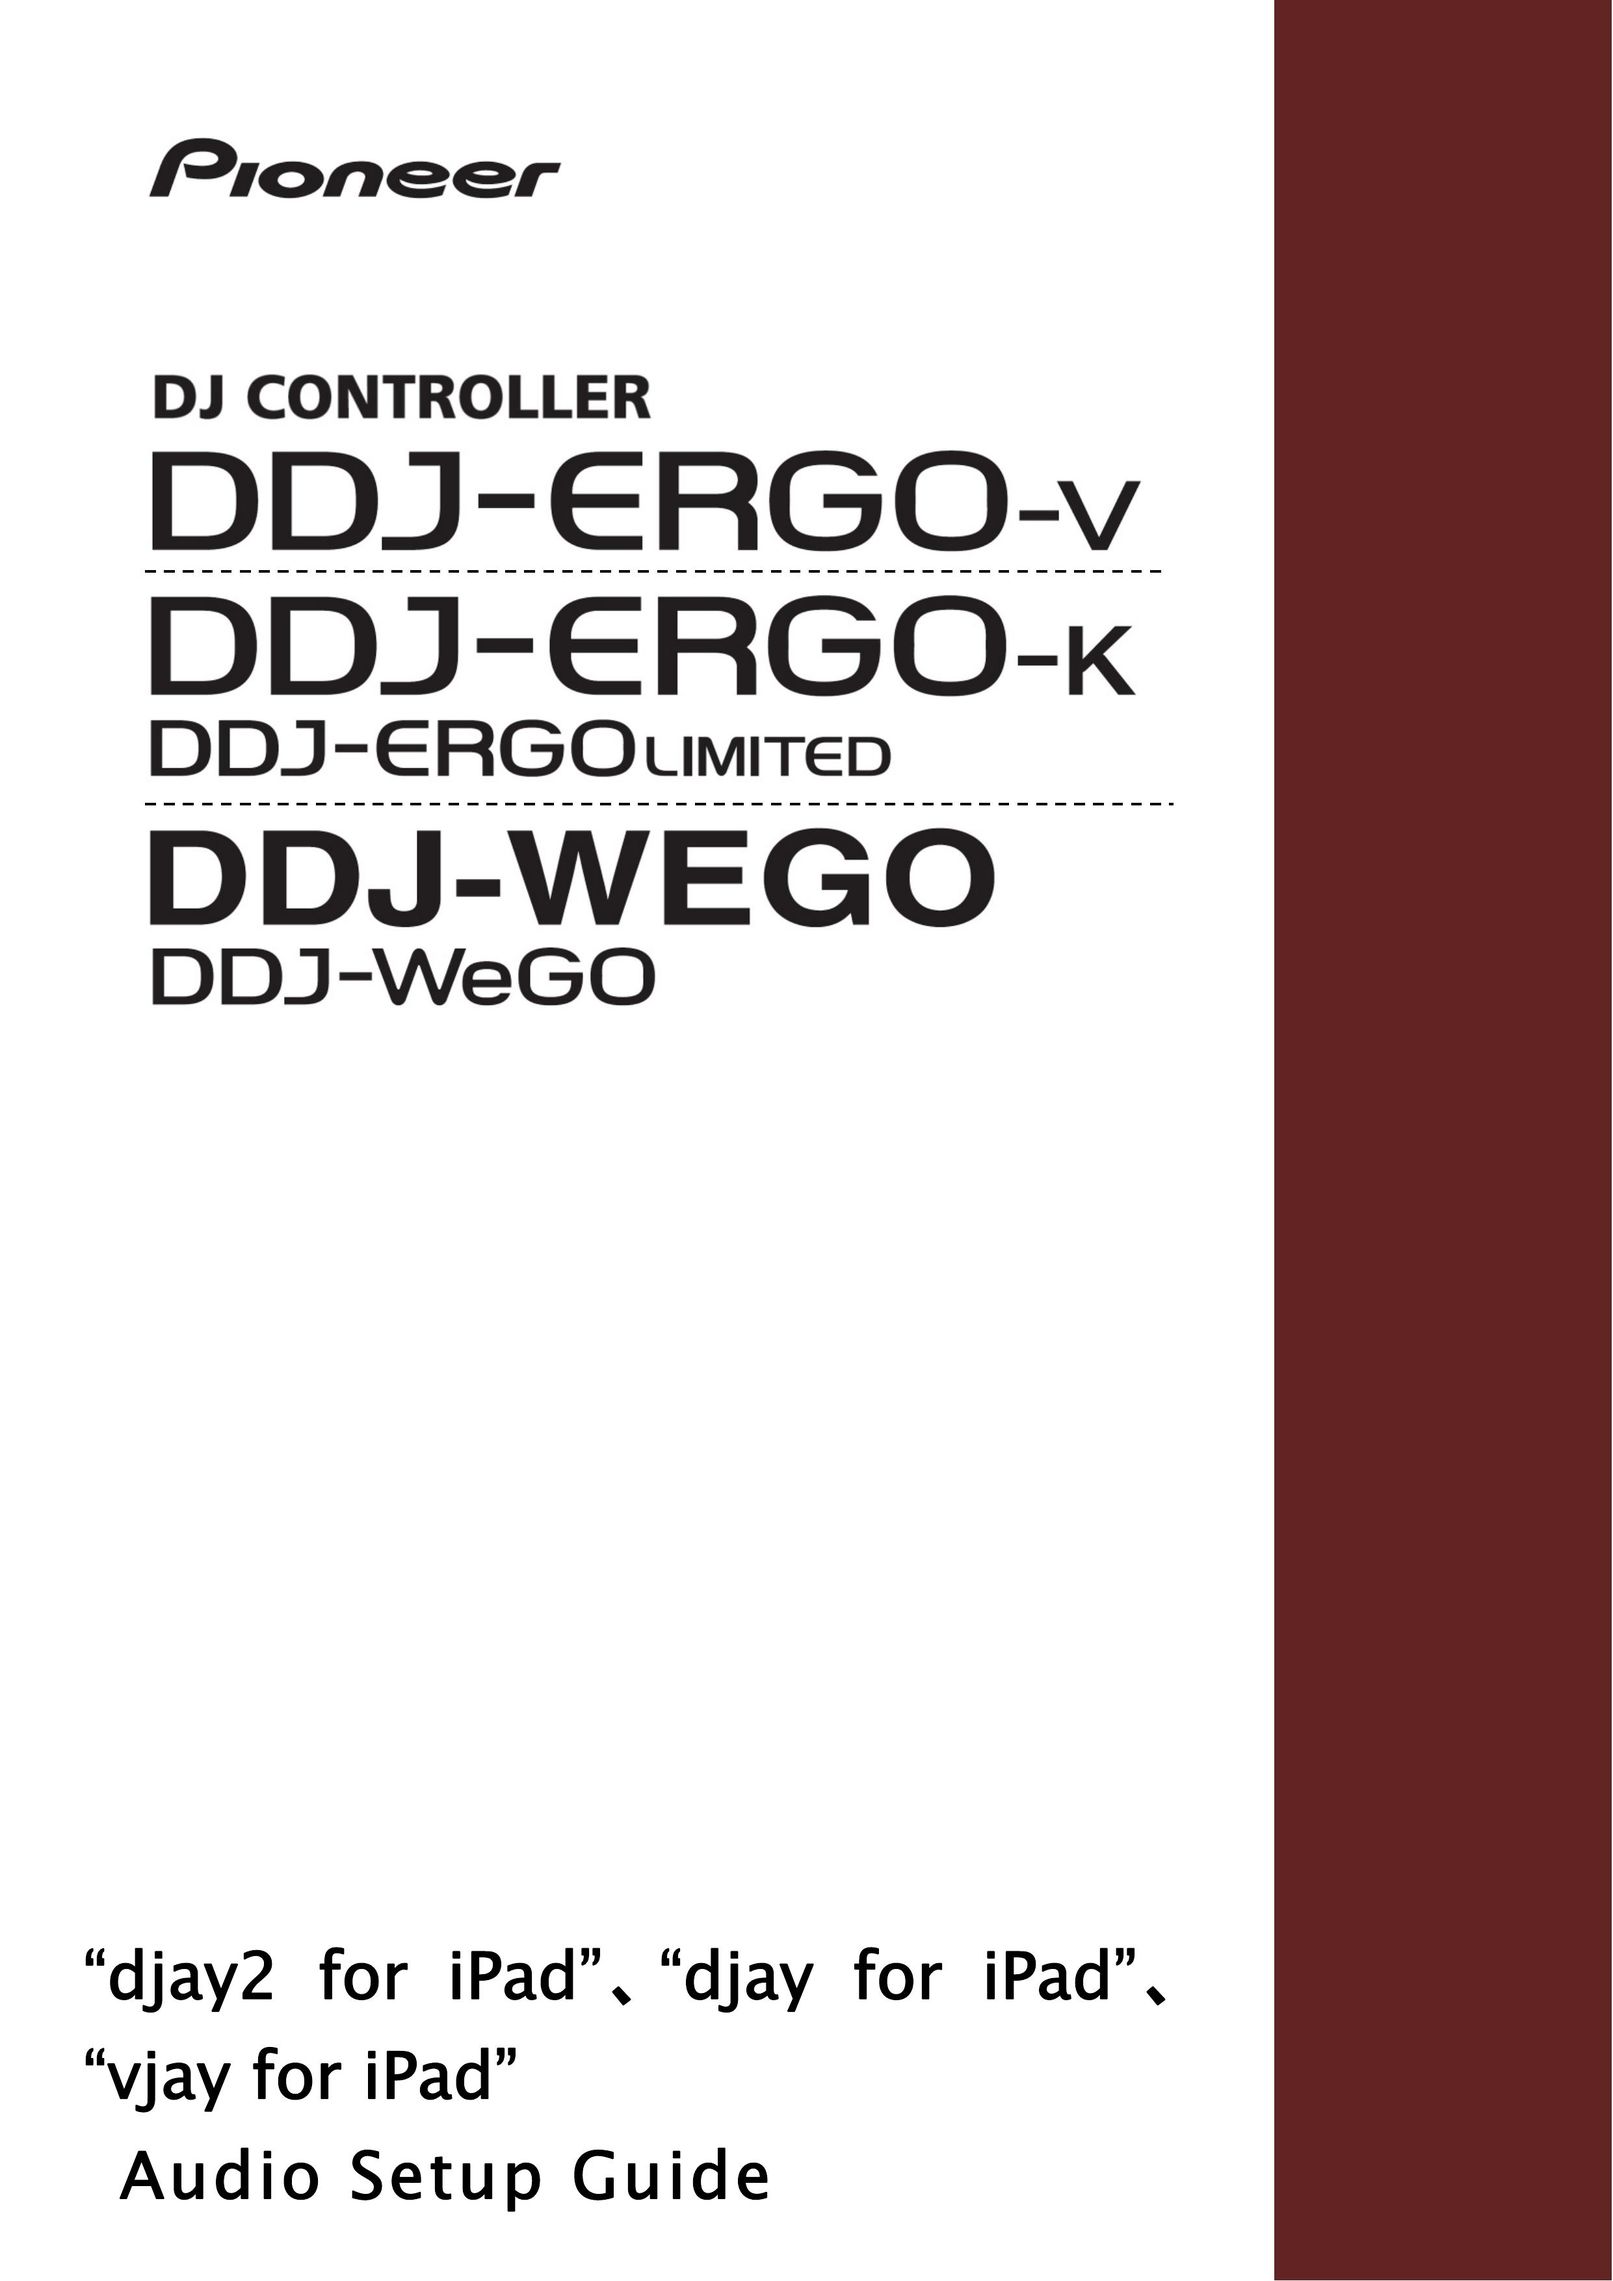 Pioneer DDJ-ERGO-LIMITED Video Game Controller User Manual